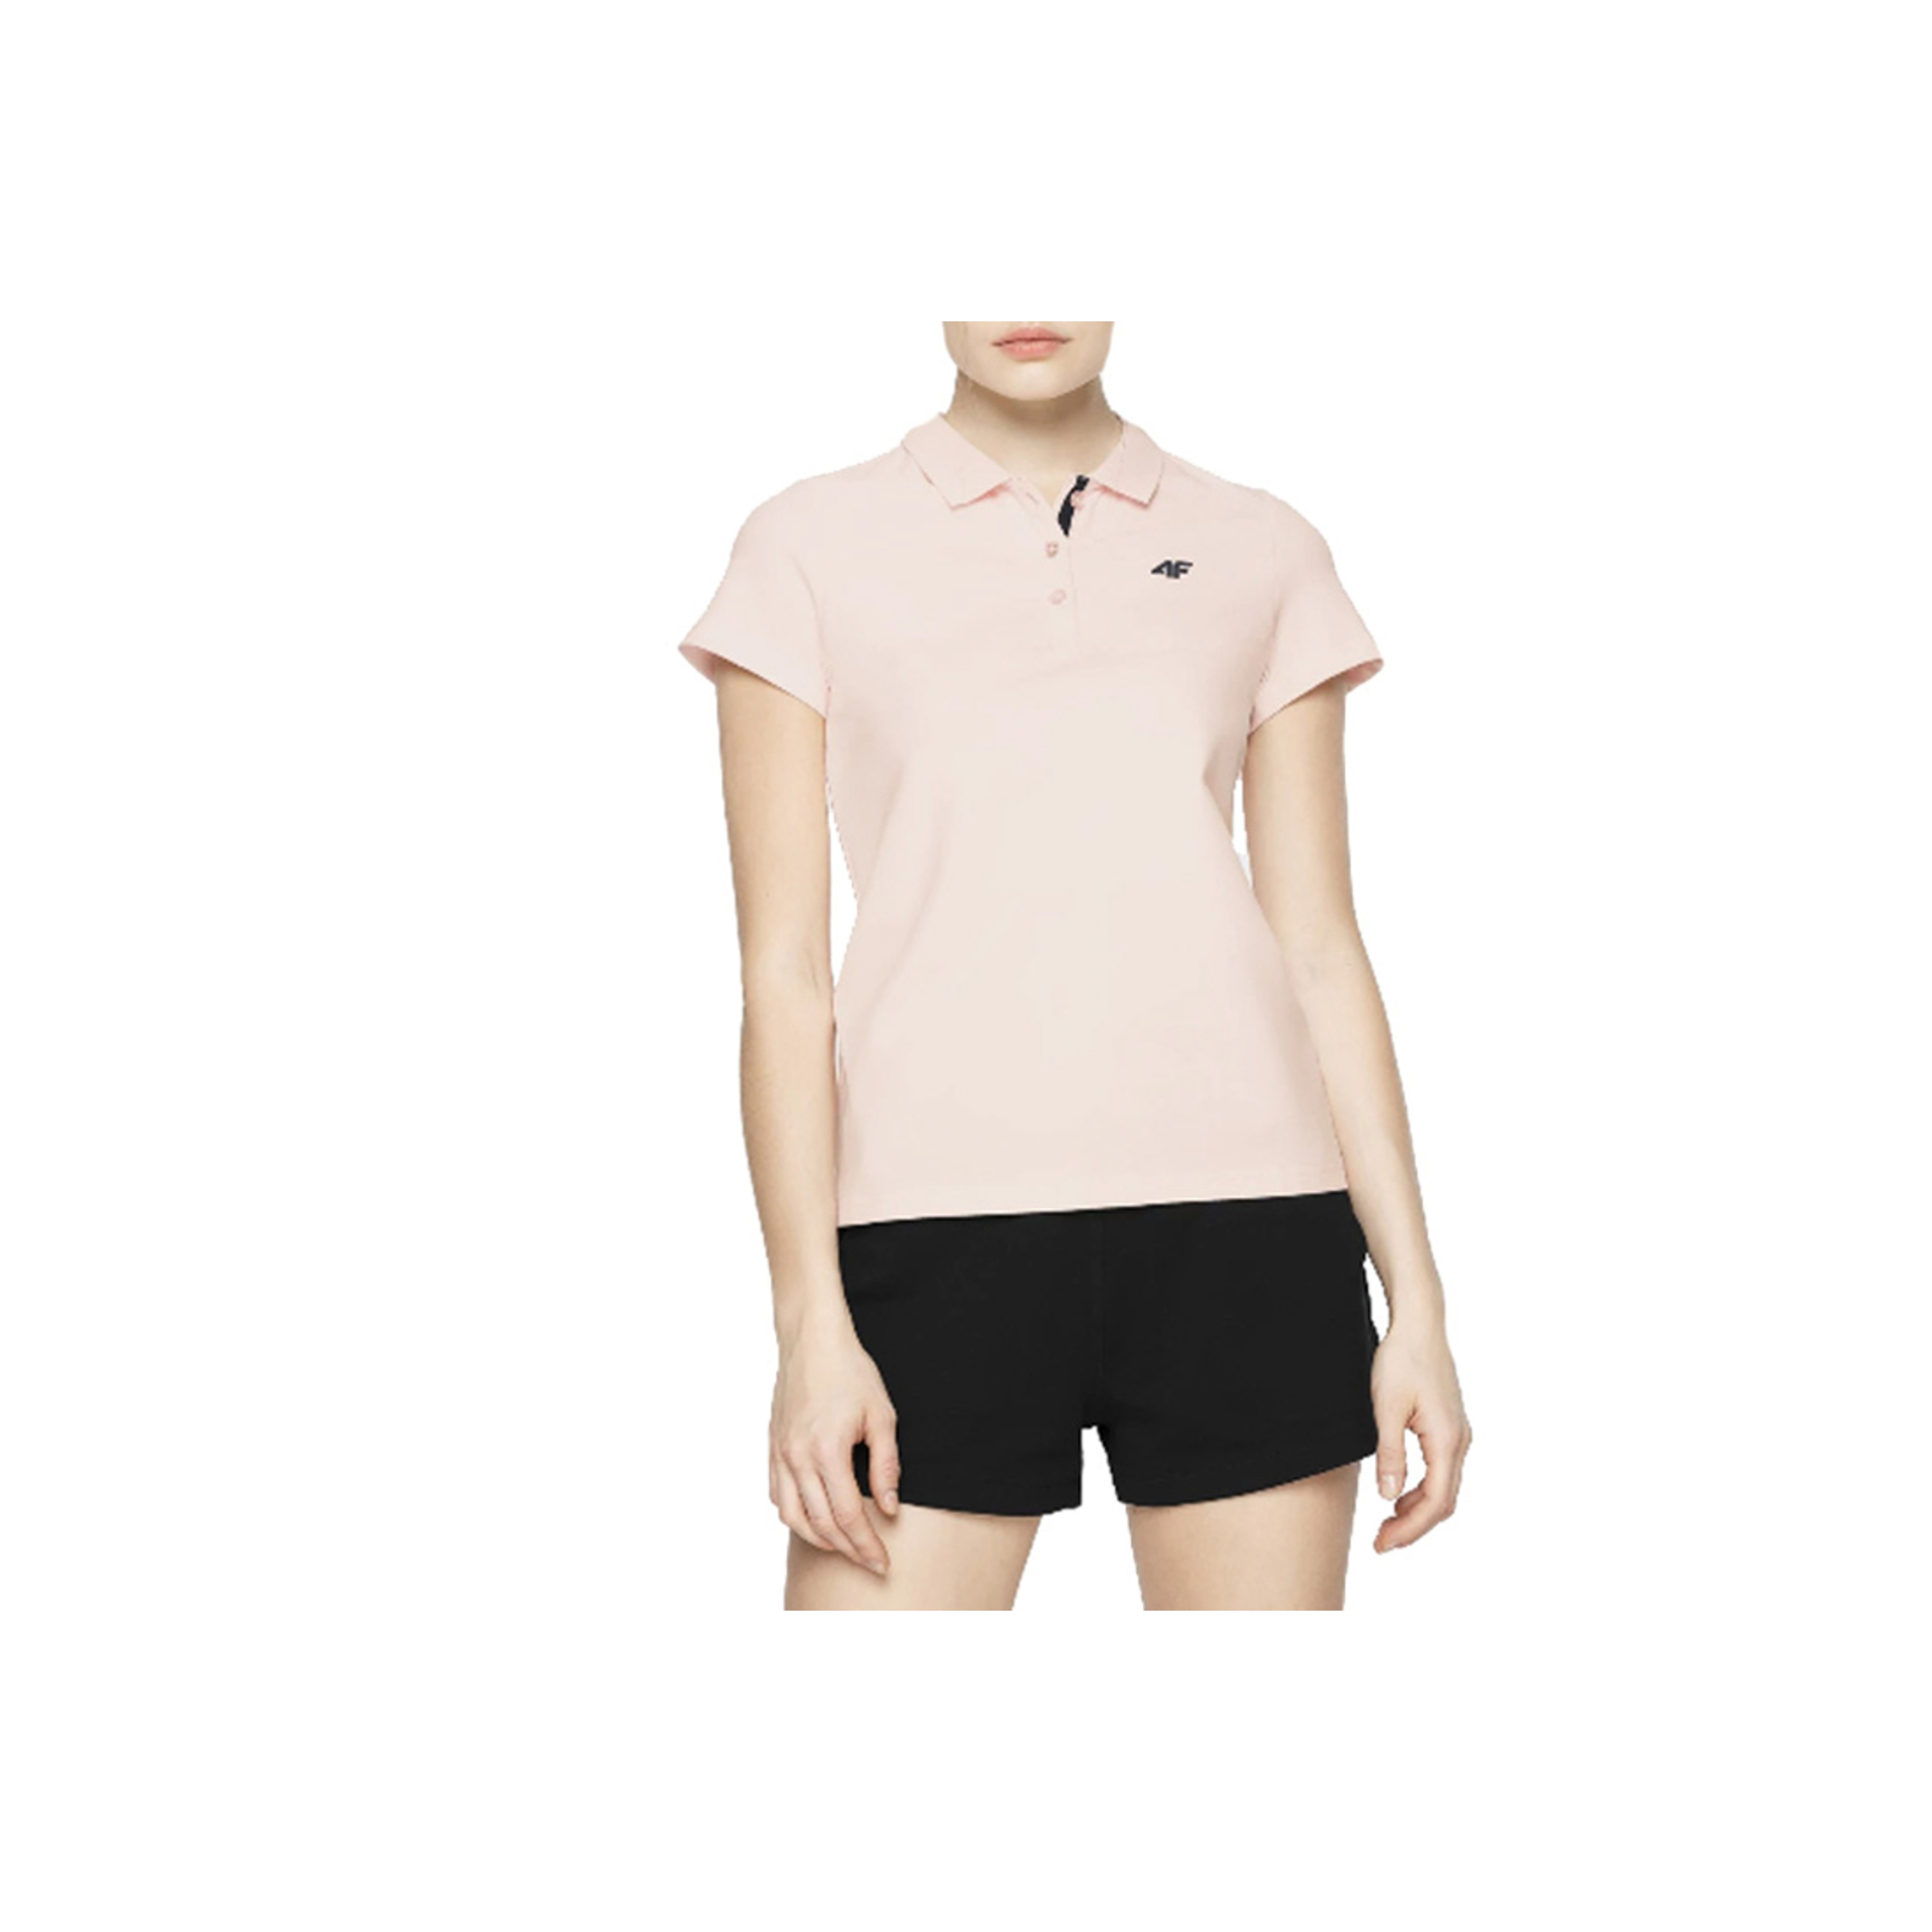 4f Women's T-shirt Polo Nosh4-tsd007-56s - rosa - Mujer, Rosa, Camiseta  MKP